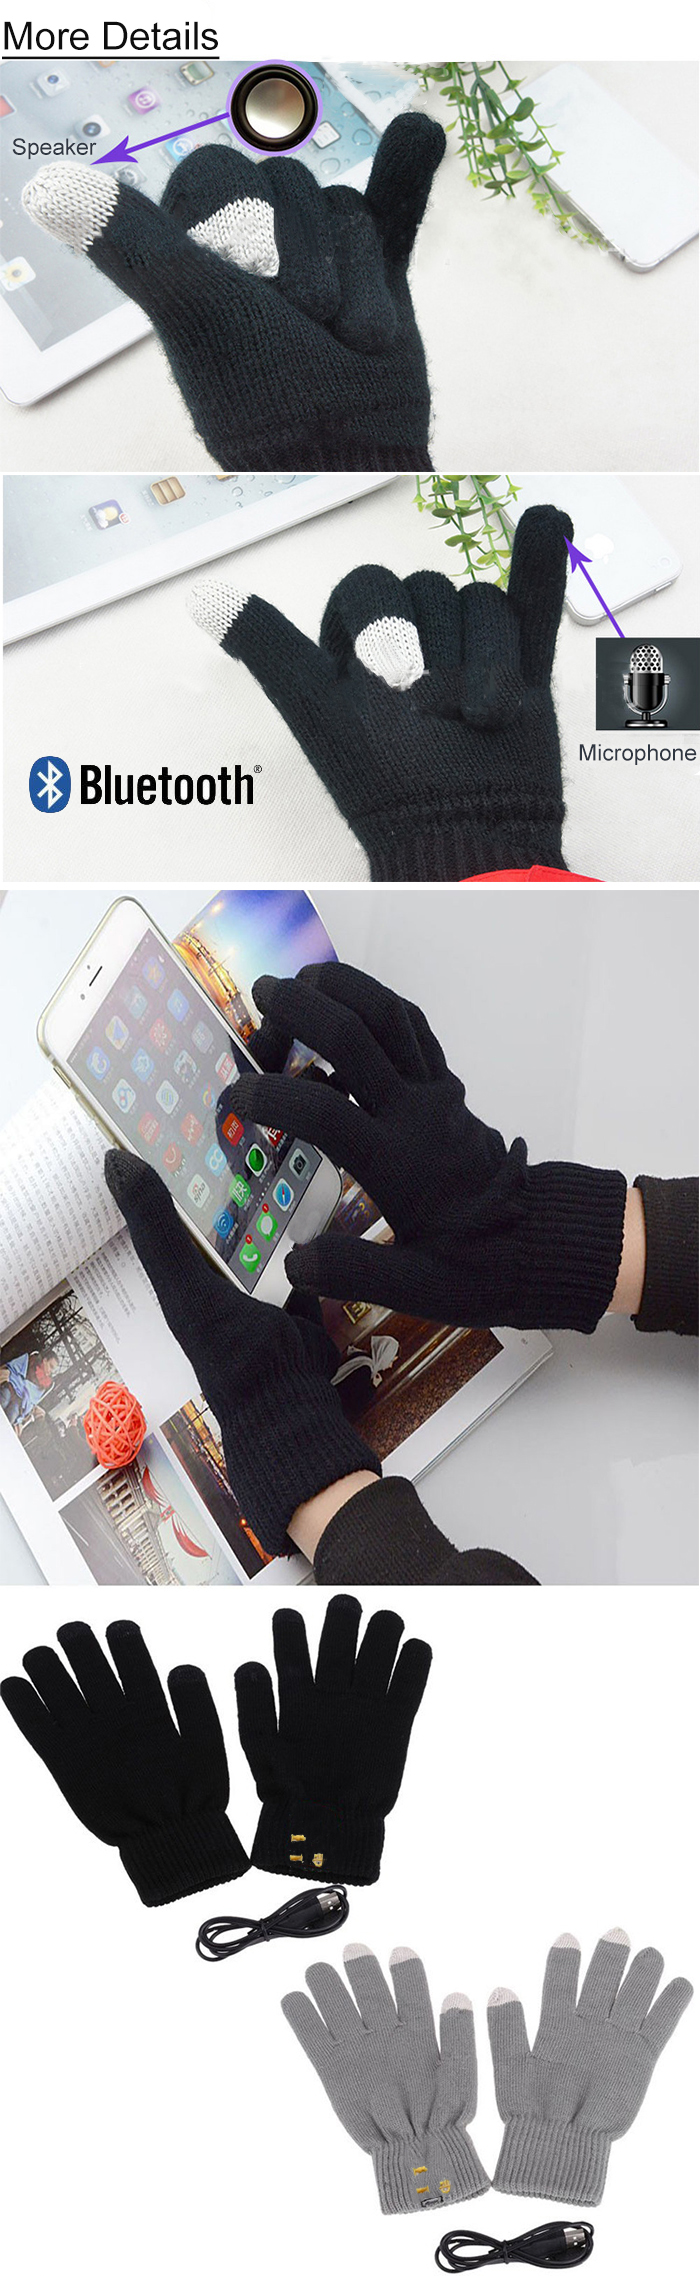 Winter-Smart-Bluetooth-Gloves-Touch-Screen-Mobile-Headset-Speaker-Hand-Gesture-Talking-Gloves-1101075